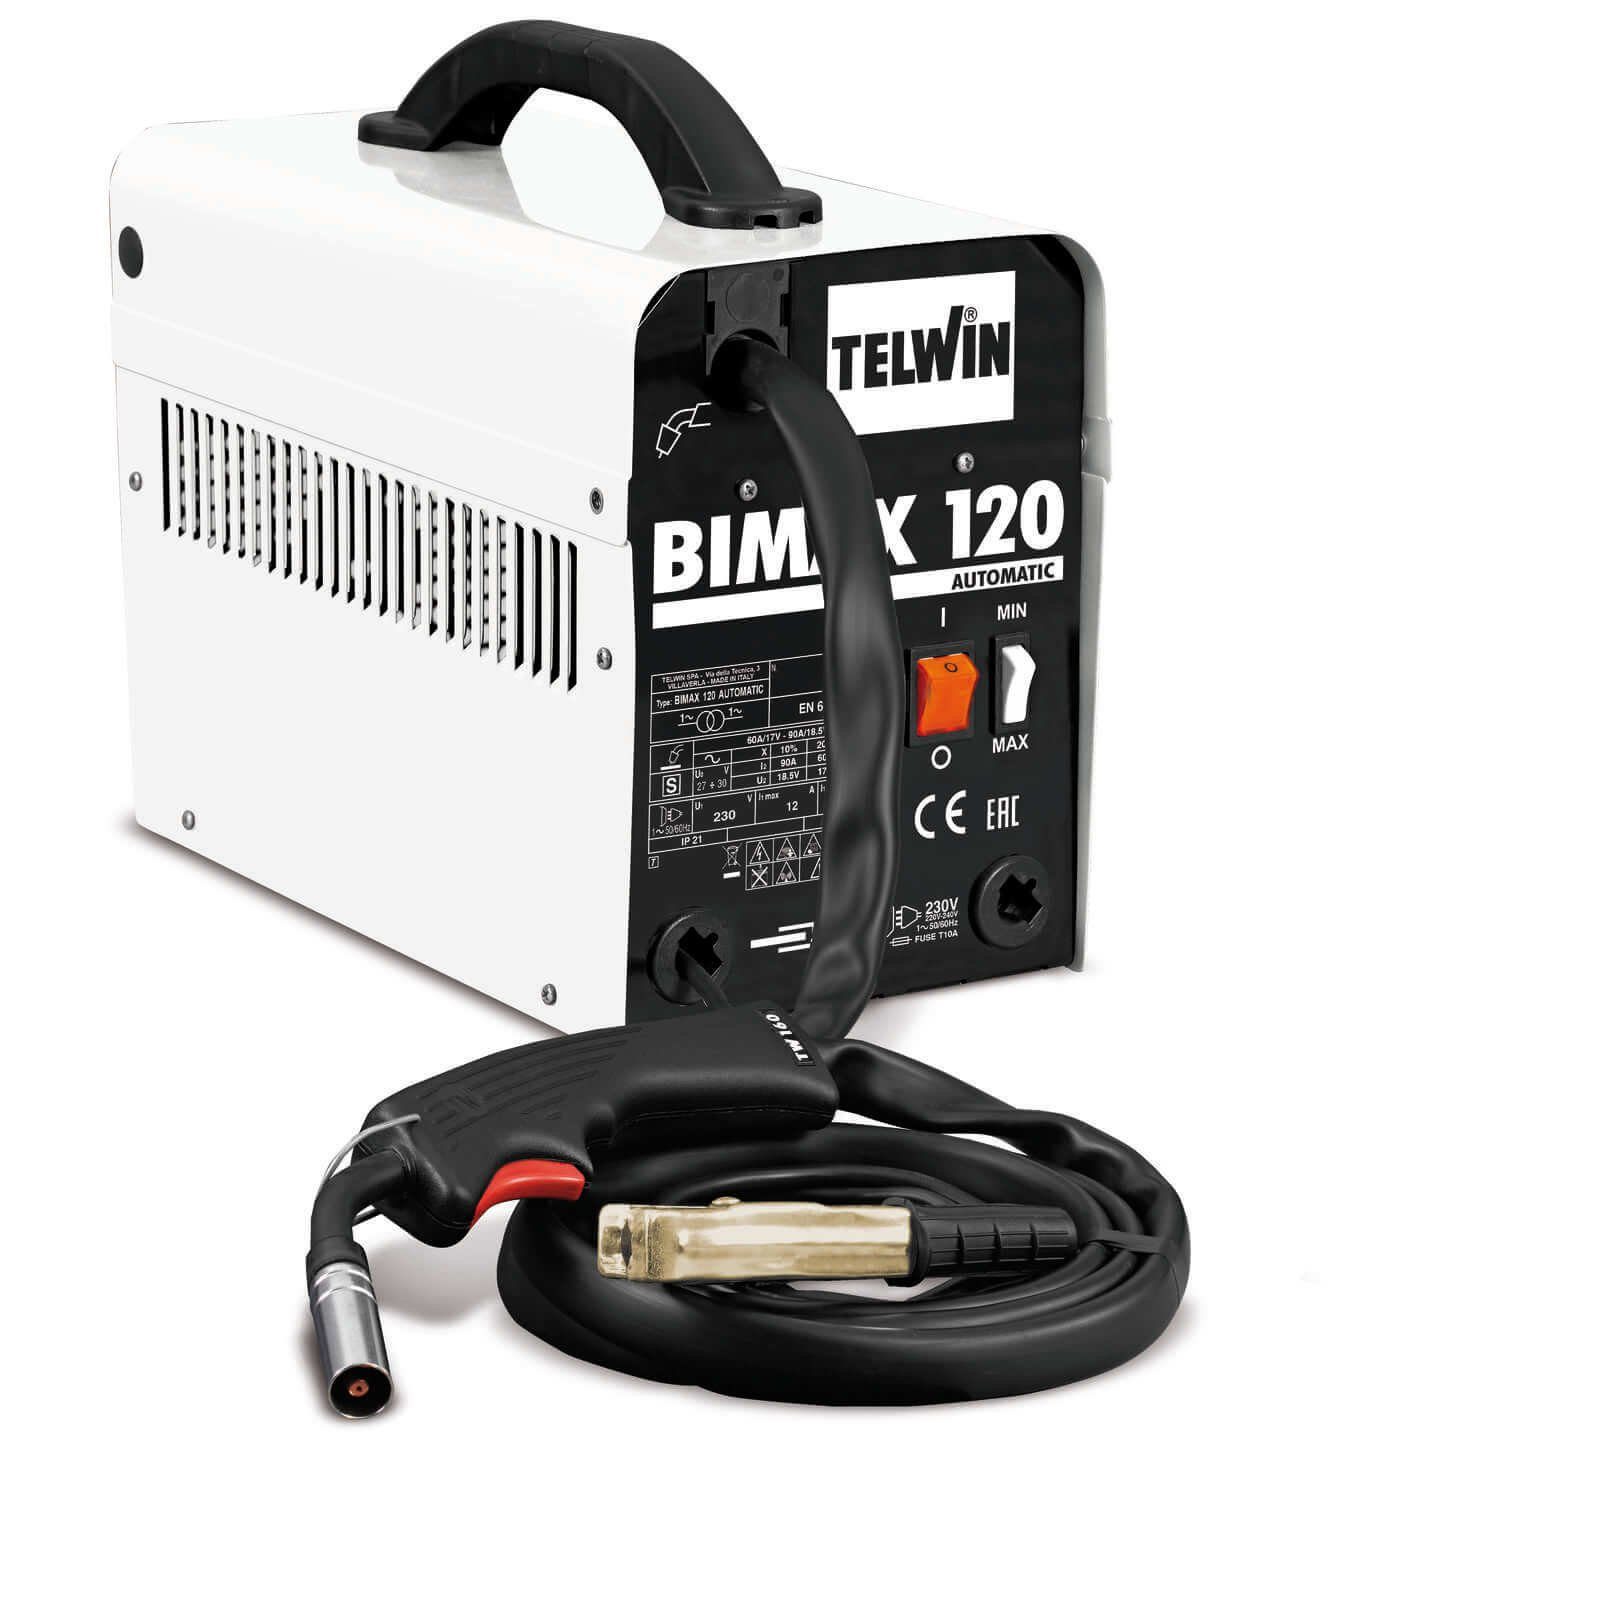 Telwin Schweißbrenner BIMAX Elektroschweißgerät Fülldraht, AUTOMATIC, 120 TELWIN Schweißinverter